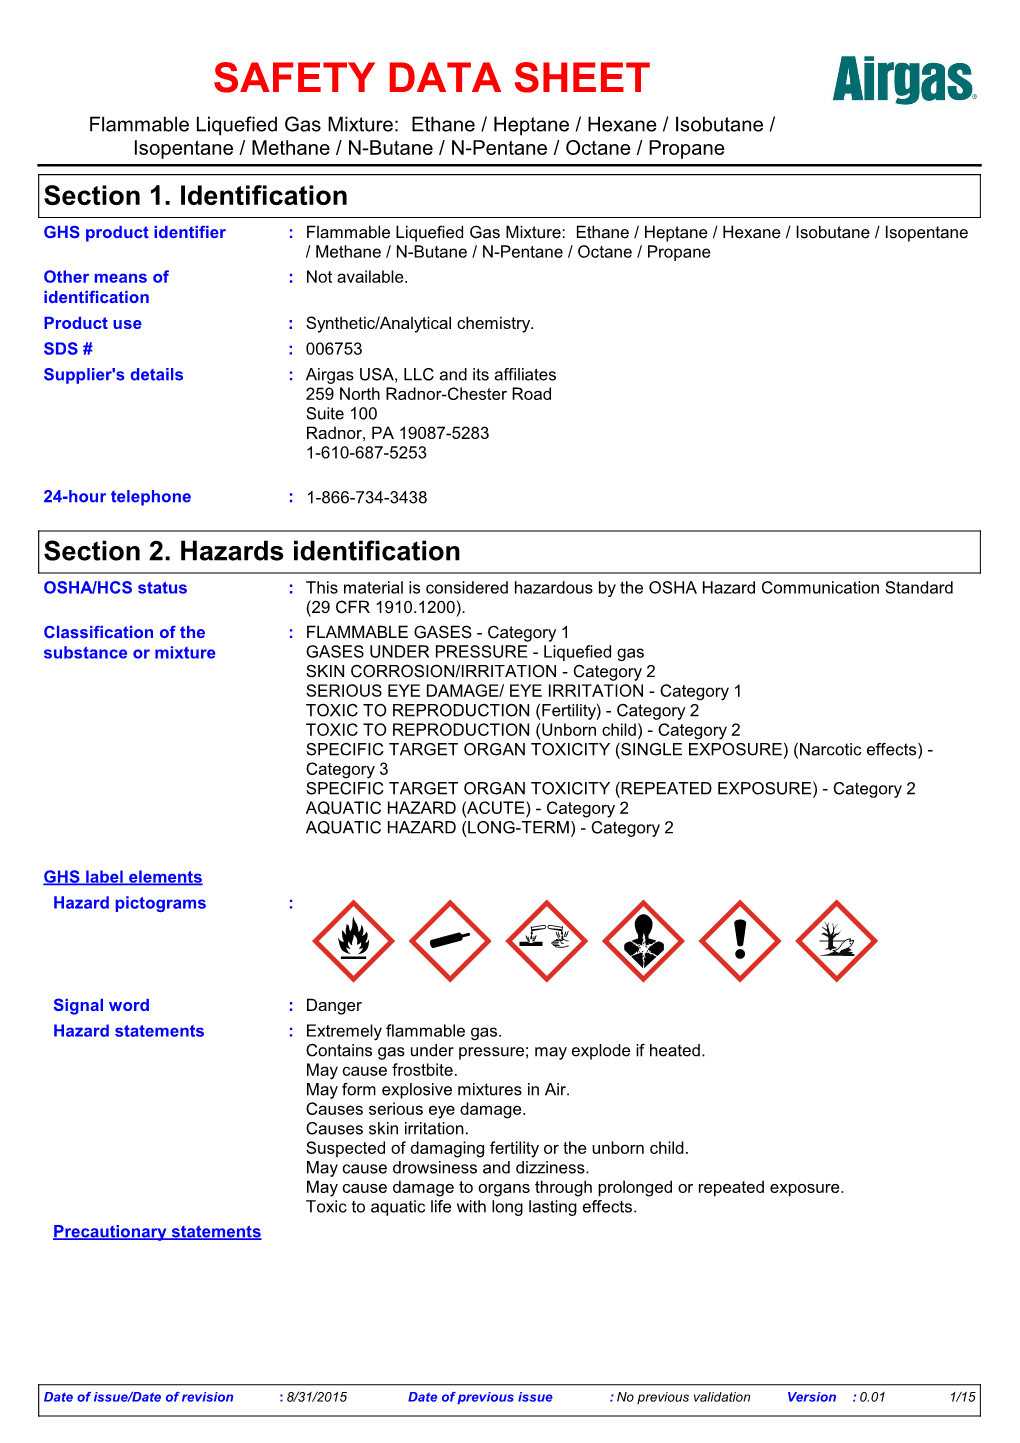 SAFETY DATA SHEET Flammable Liquefied Gas Mixture: Ethane / Heptane / Hexane / Isobutane / Isopentane / Methane / N-Butane / N-Pentane / Octane / Propane Section 1